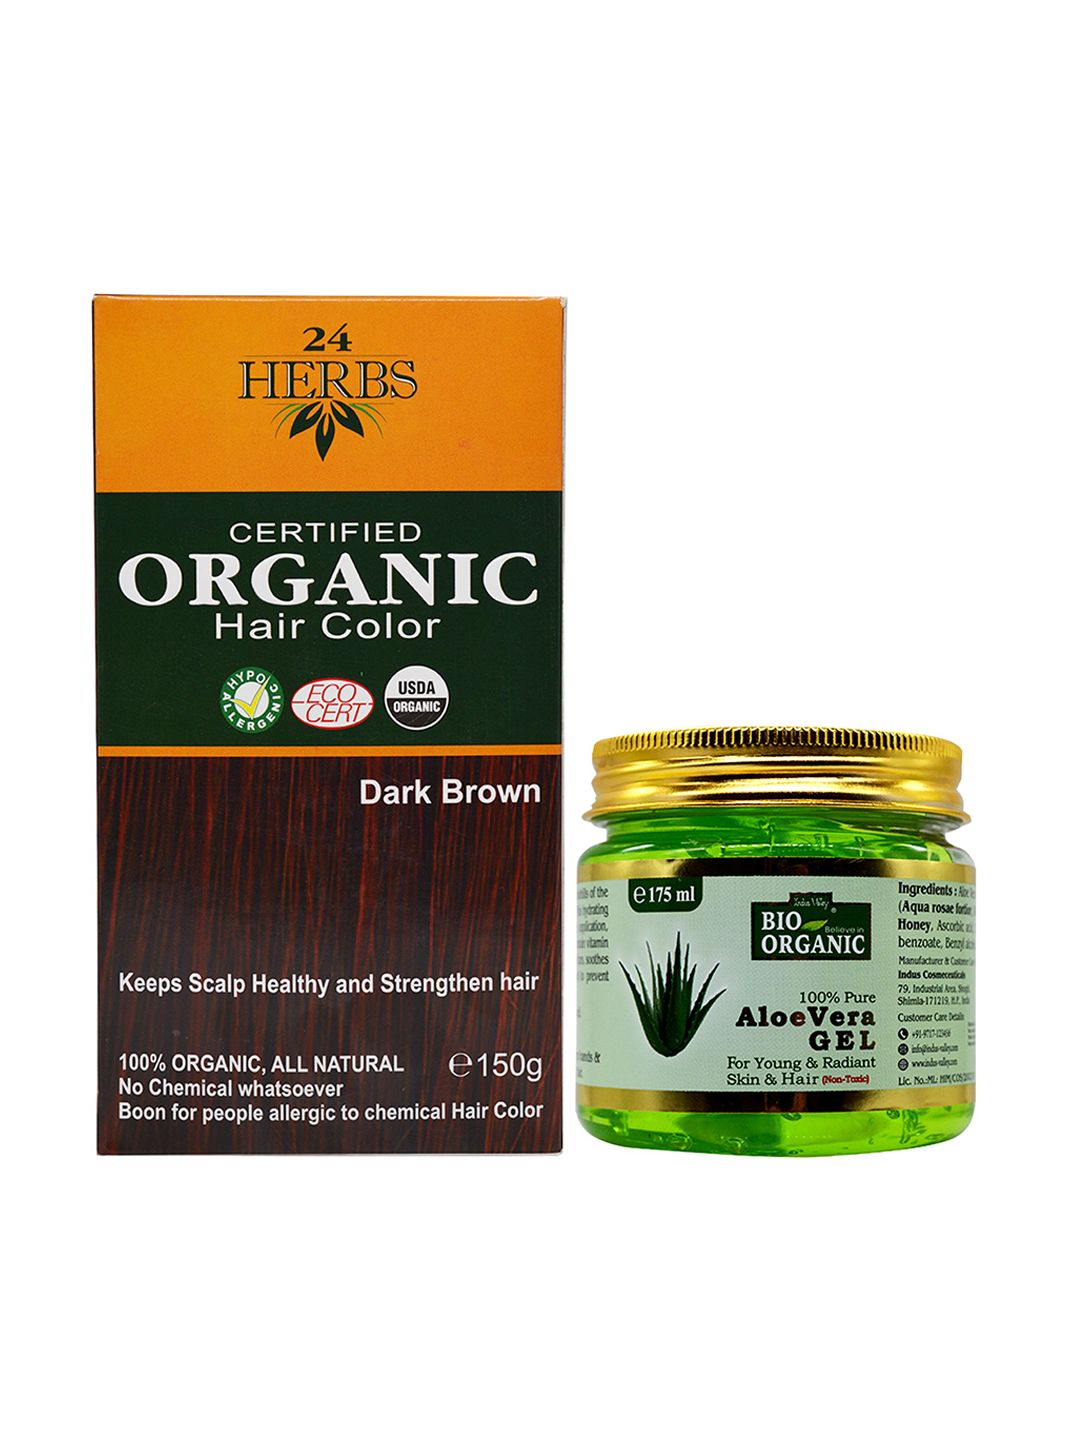 Indus valley aloe vera gel & 24 herb dark brown combo Price in India